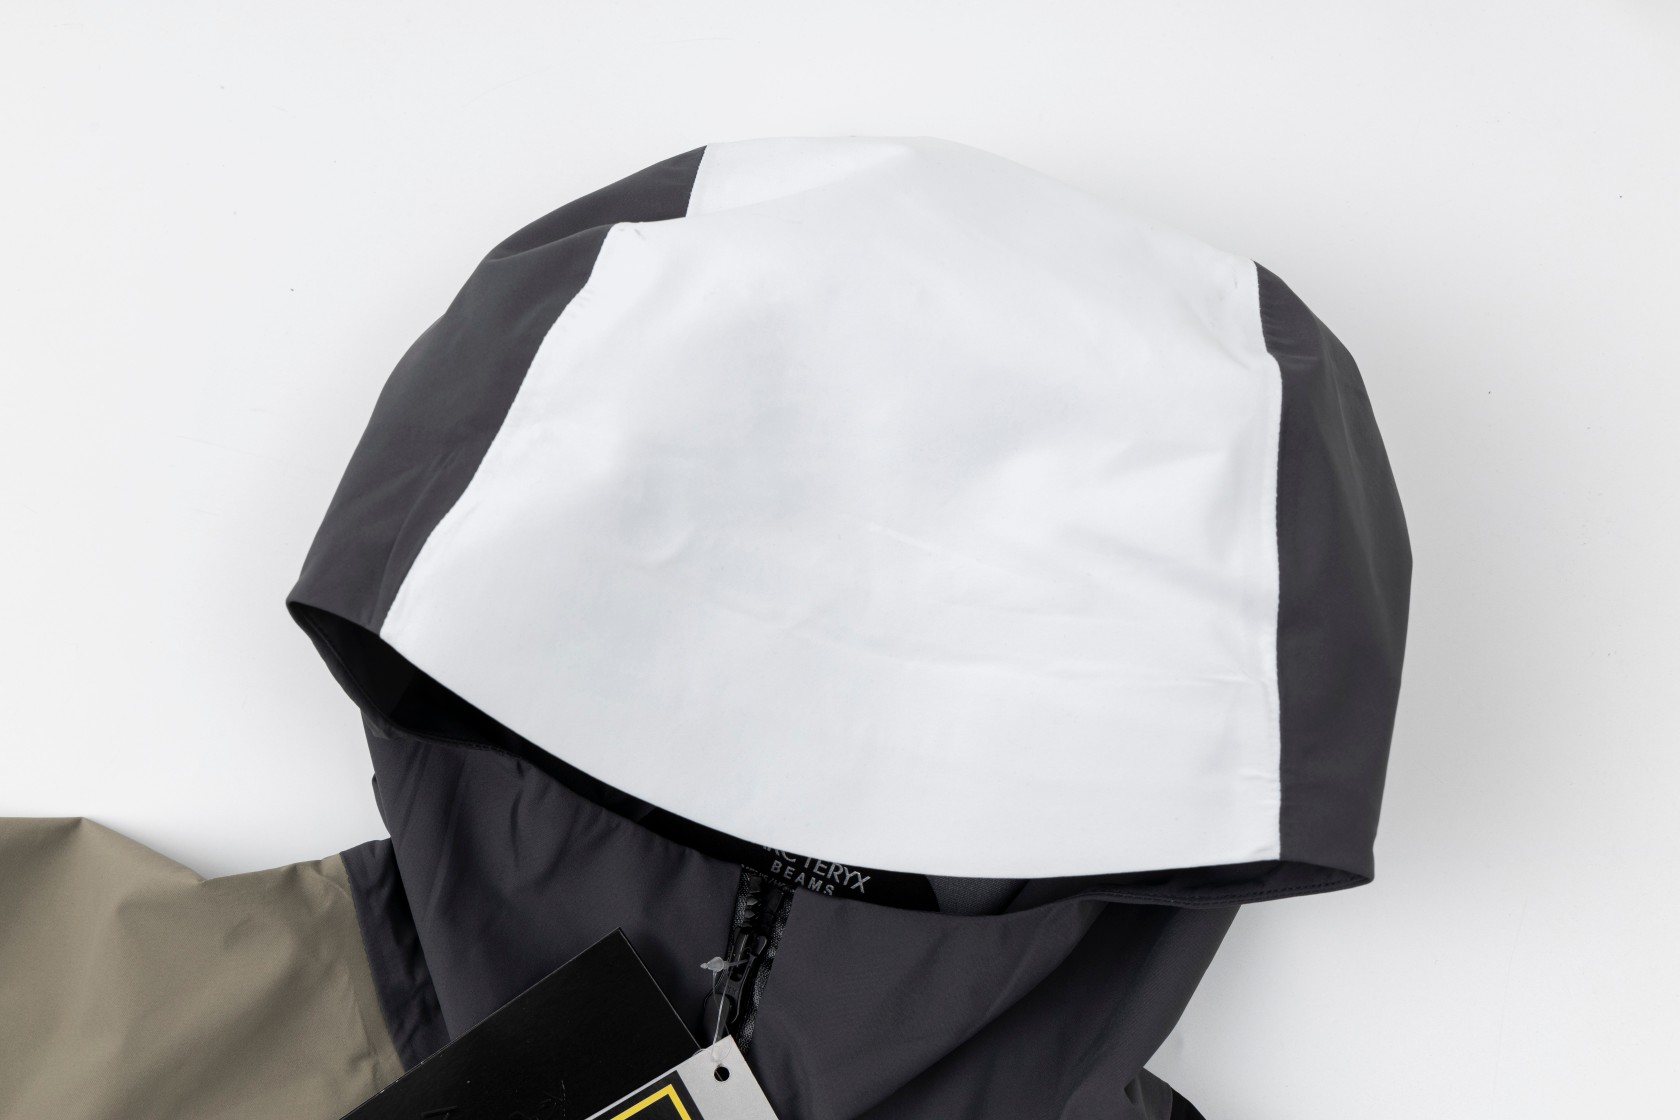 Jacket winter designer coat Top quality windproof waterproof jacket bidirectional zipper breathable fabric hardshell wear-resistant ARC